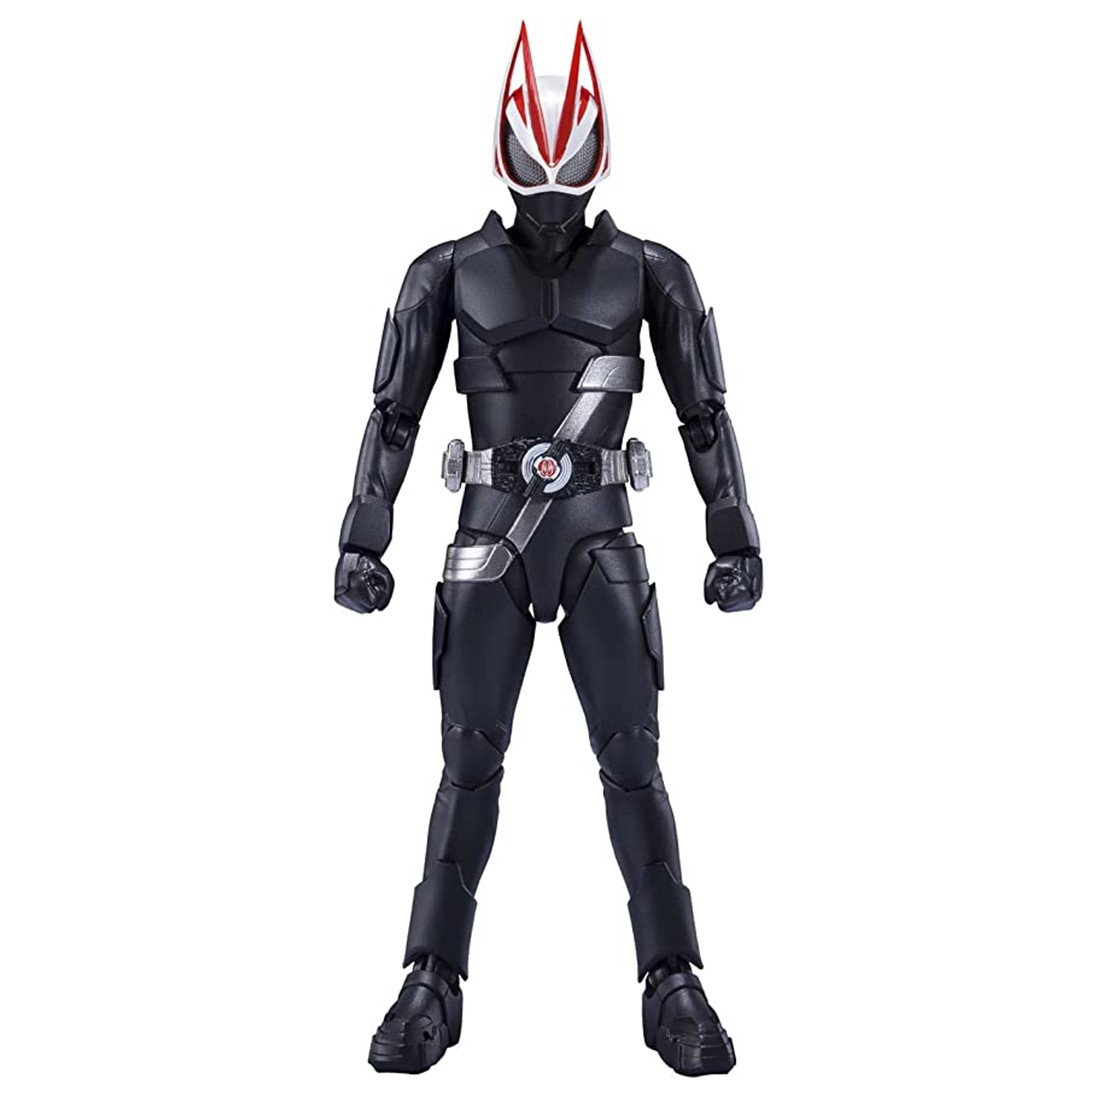 Bandai S.H.Figuarts Kamen Rider Geats Entry Raise Form Kamen Rider Geats Figure (black)